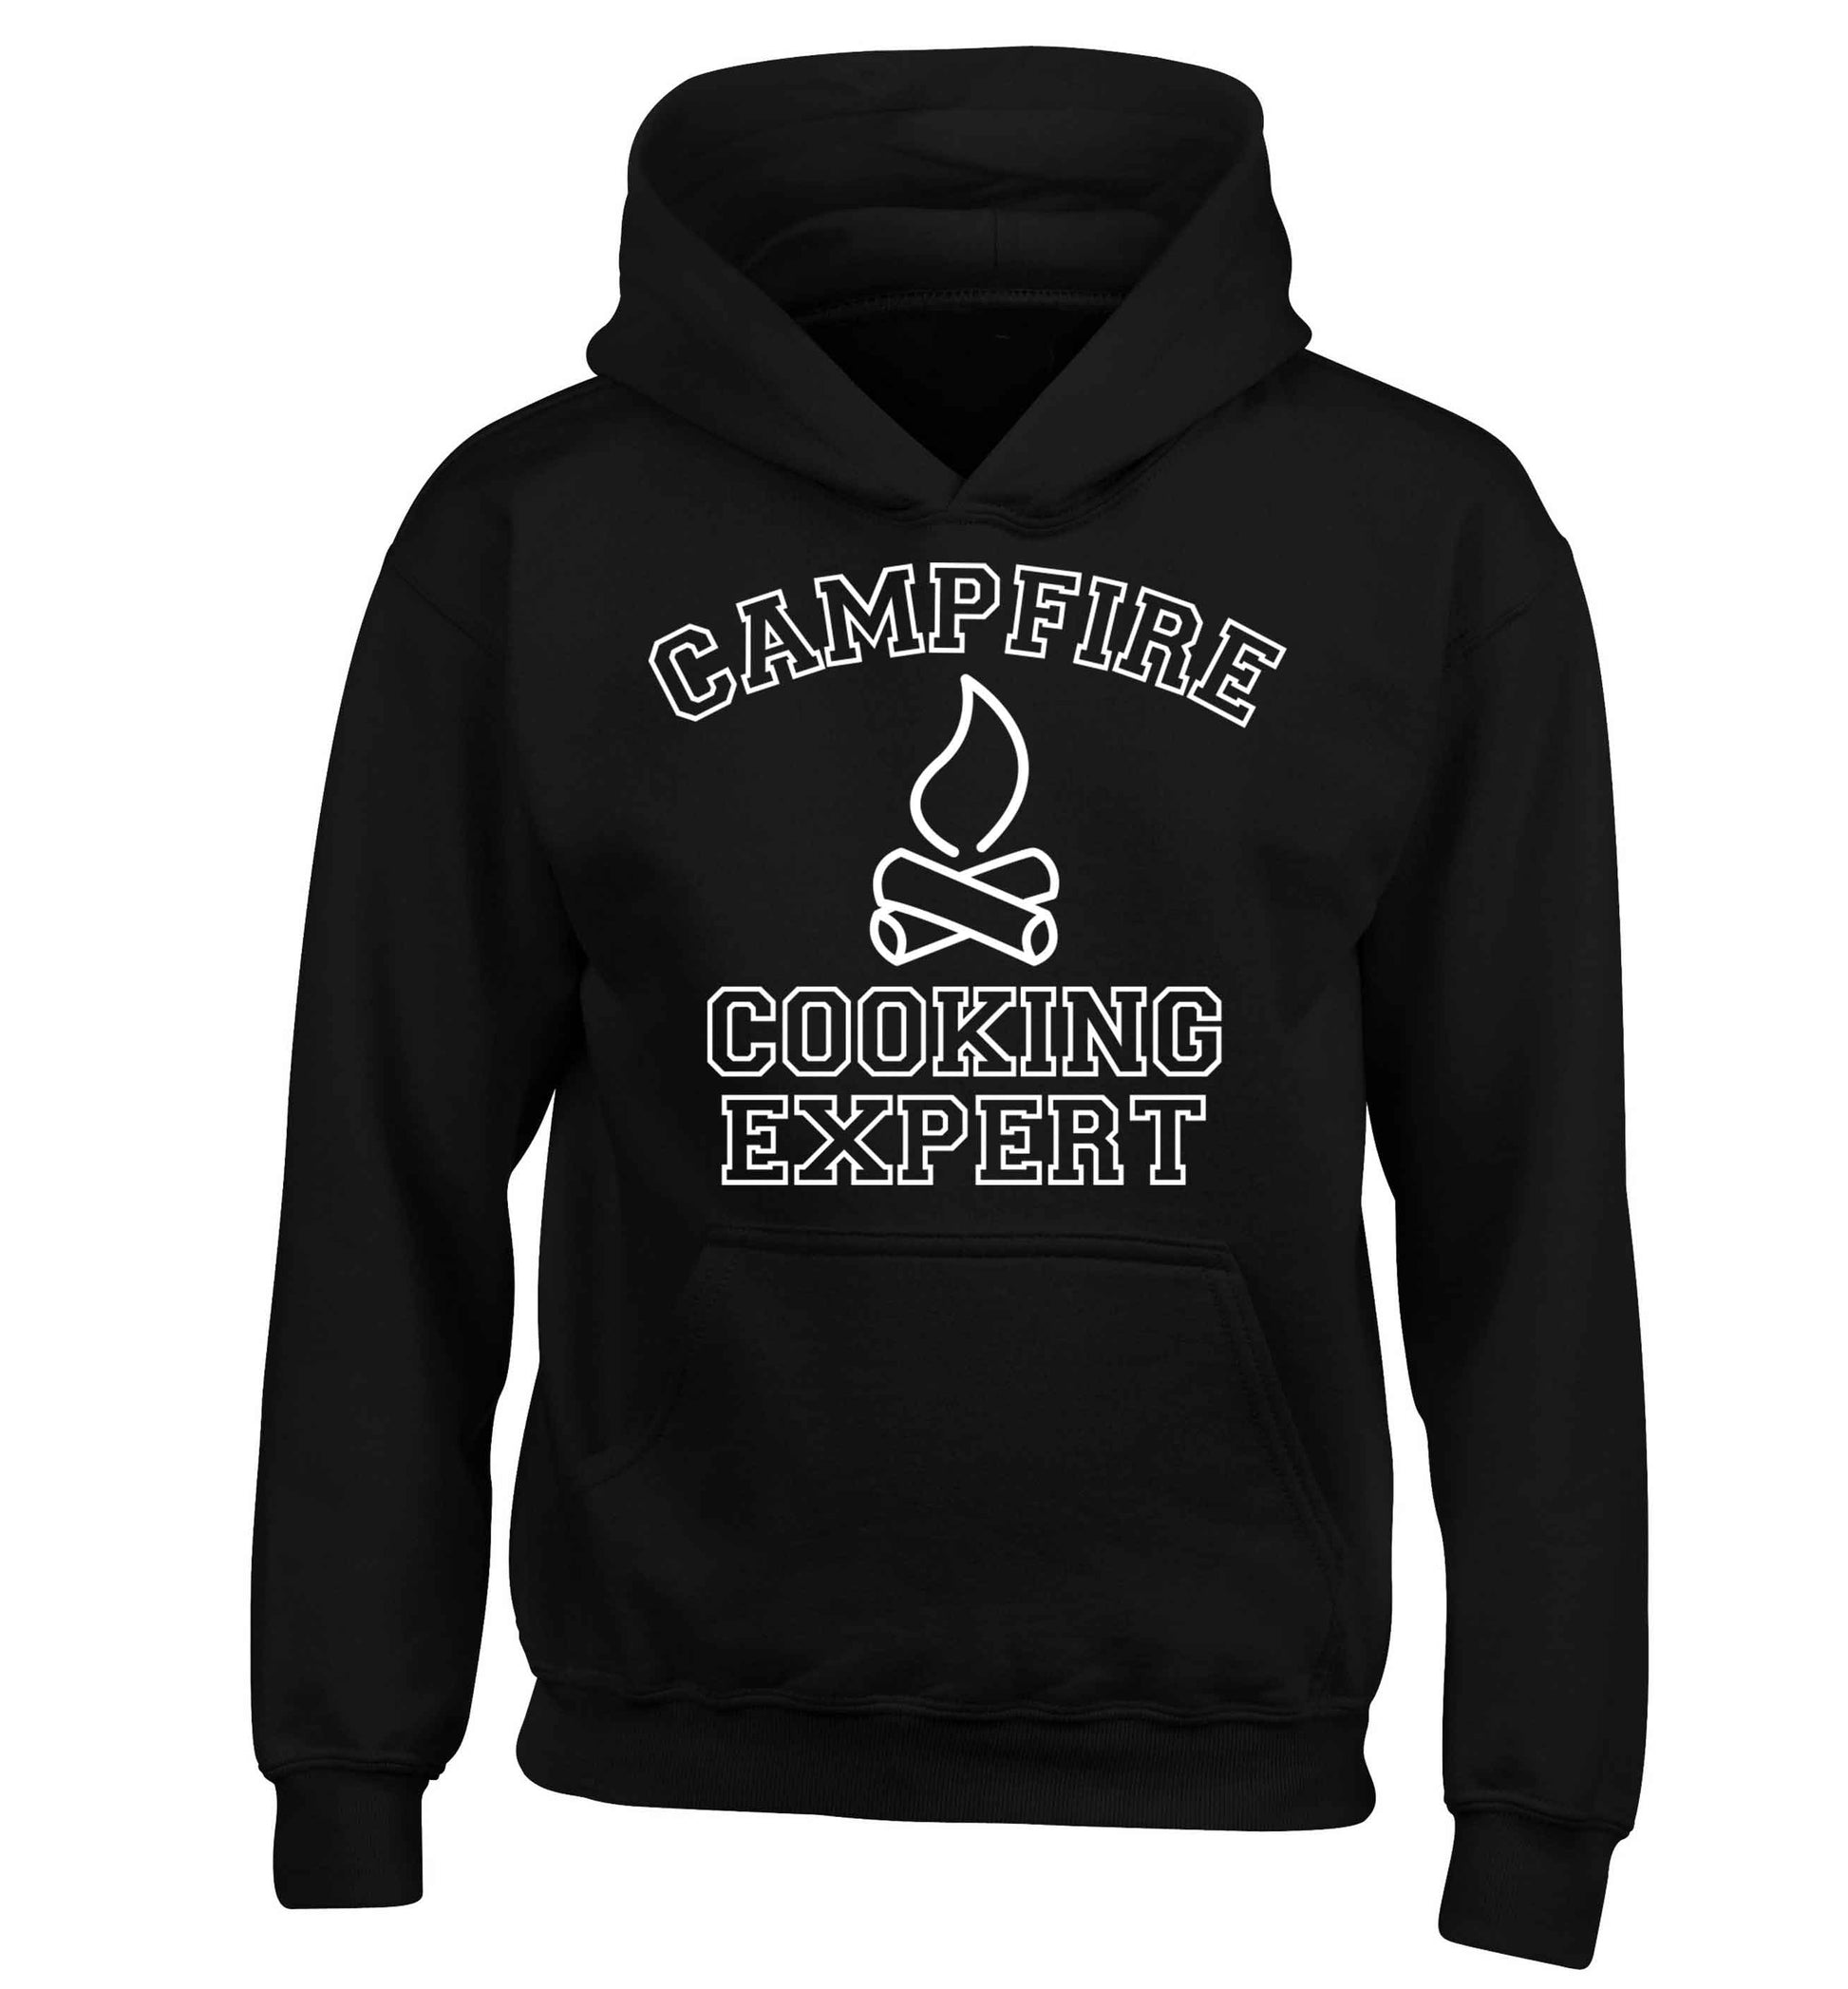 Campfire cooking expert children's black hoodie 12-13 Years